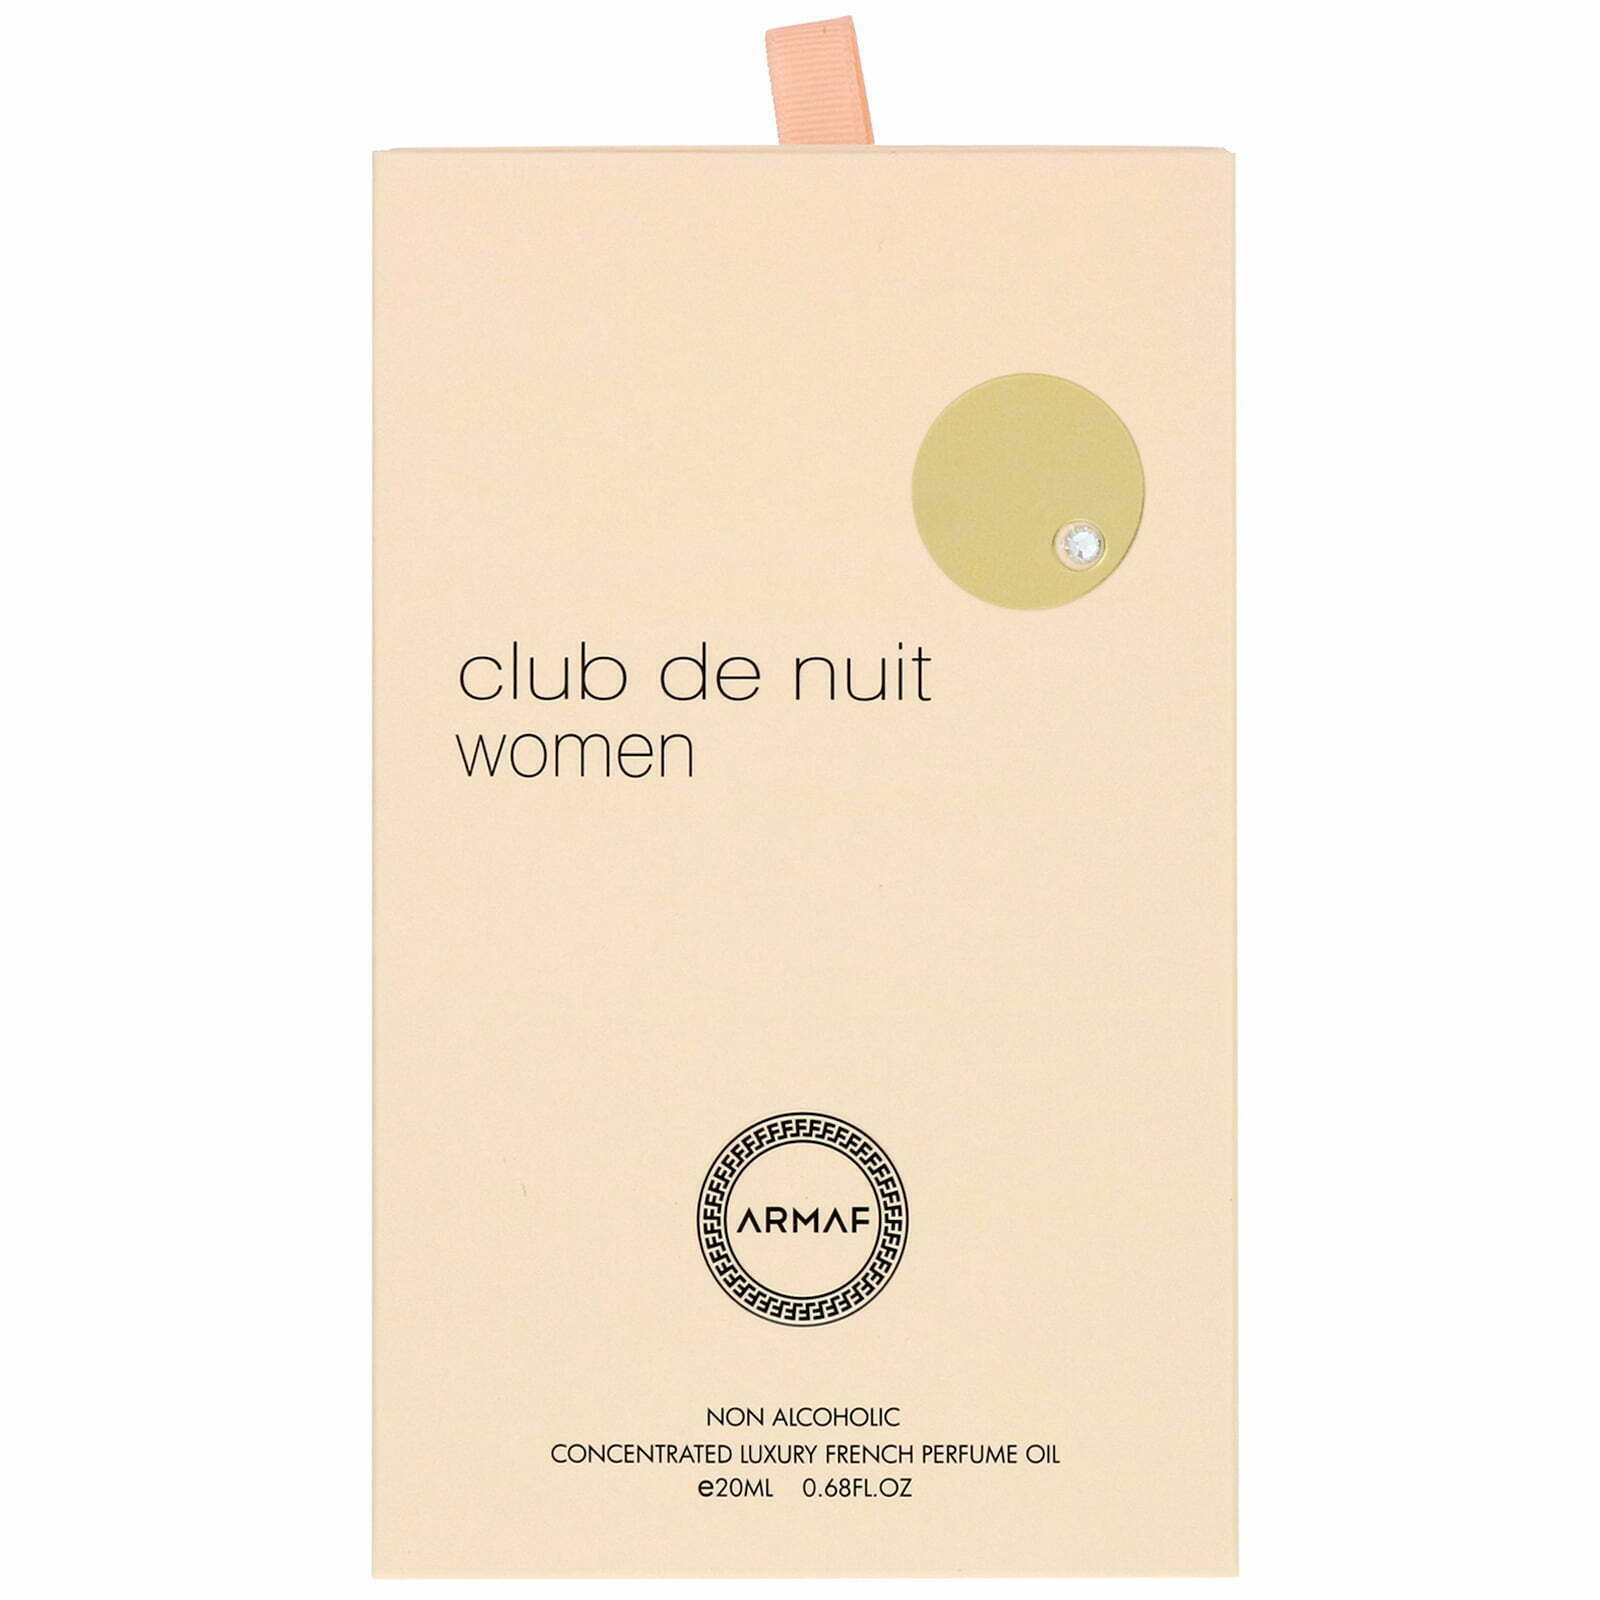 Armaf Club De Nuit Non-Alcoholic Perfume Oil 20ml